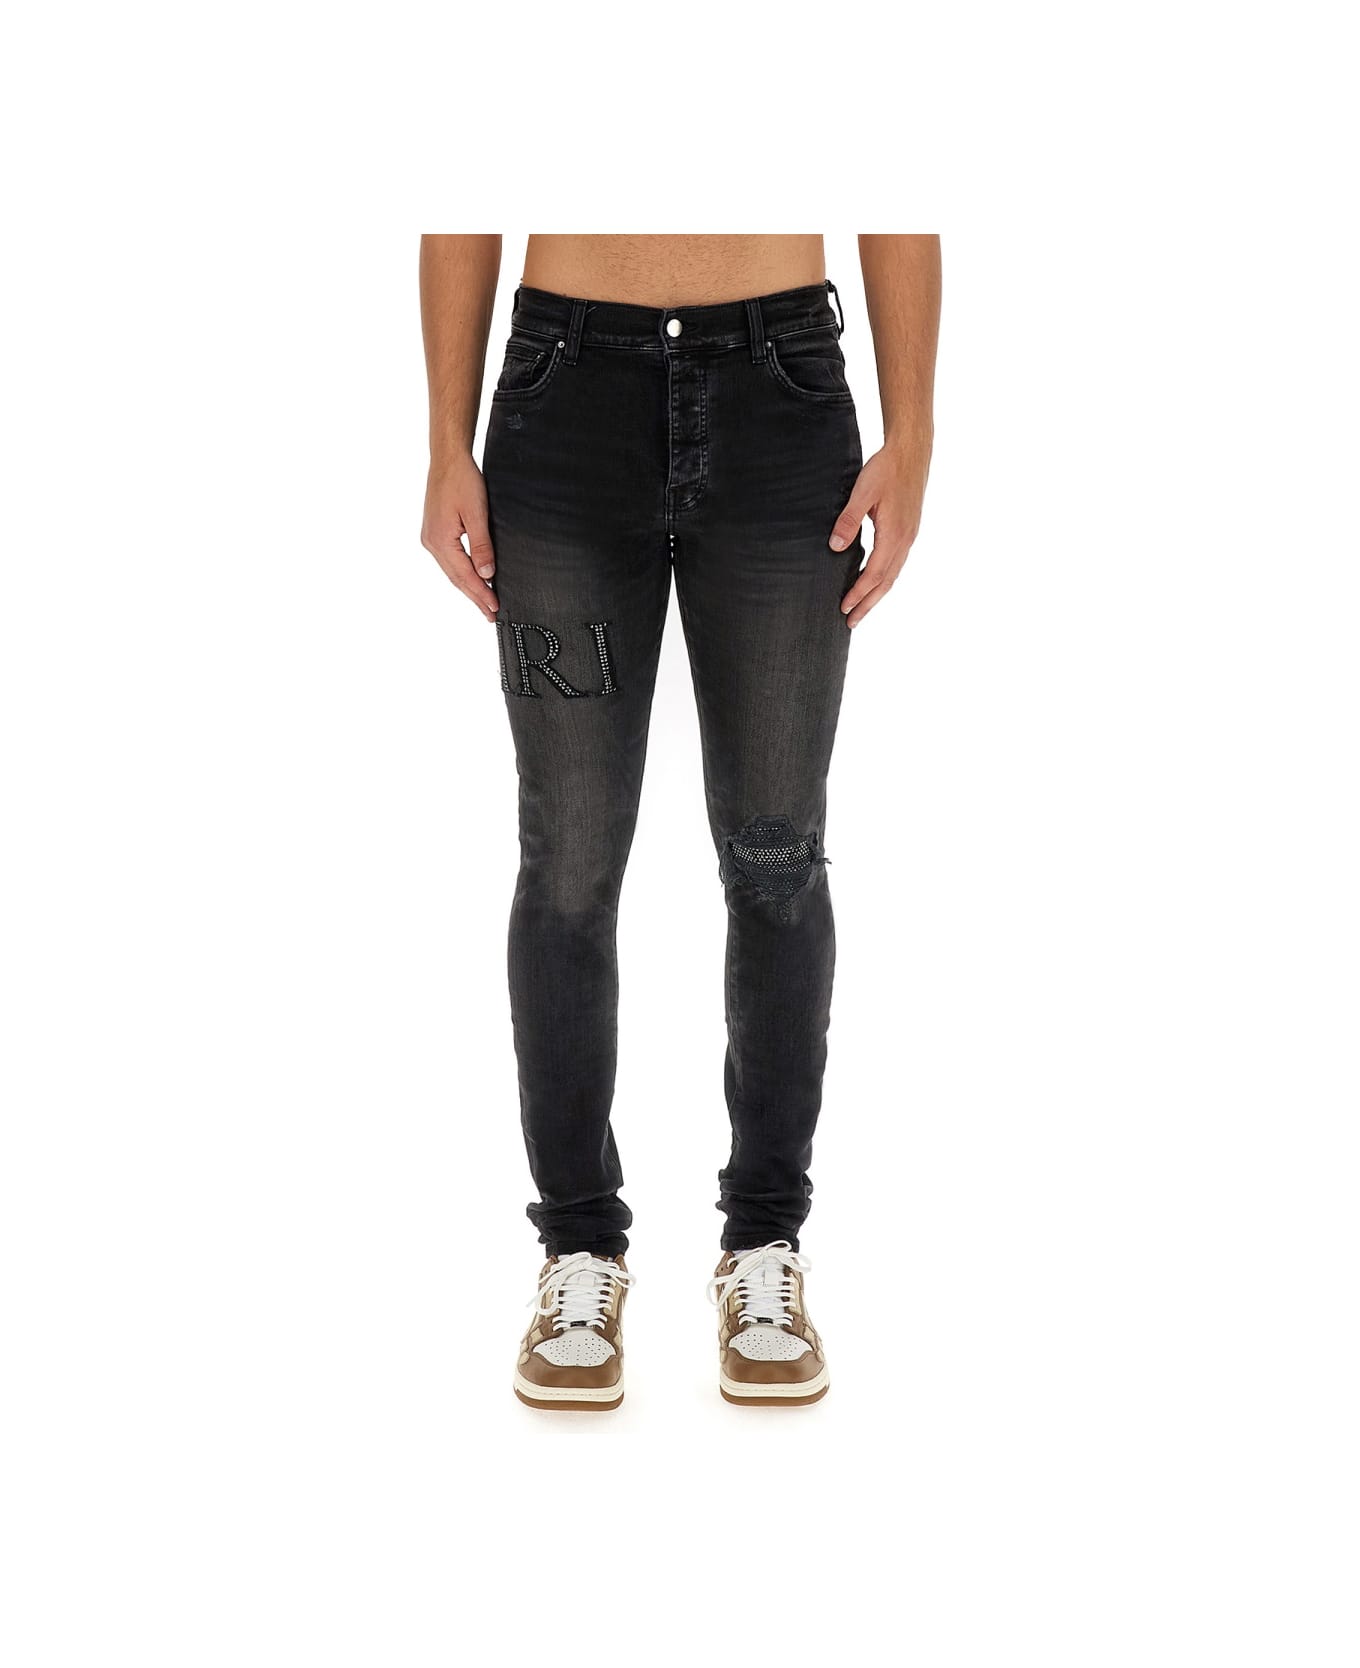 AMIRI Slim Fit Jeans - BLACK